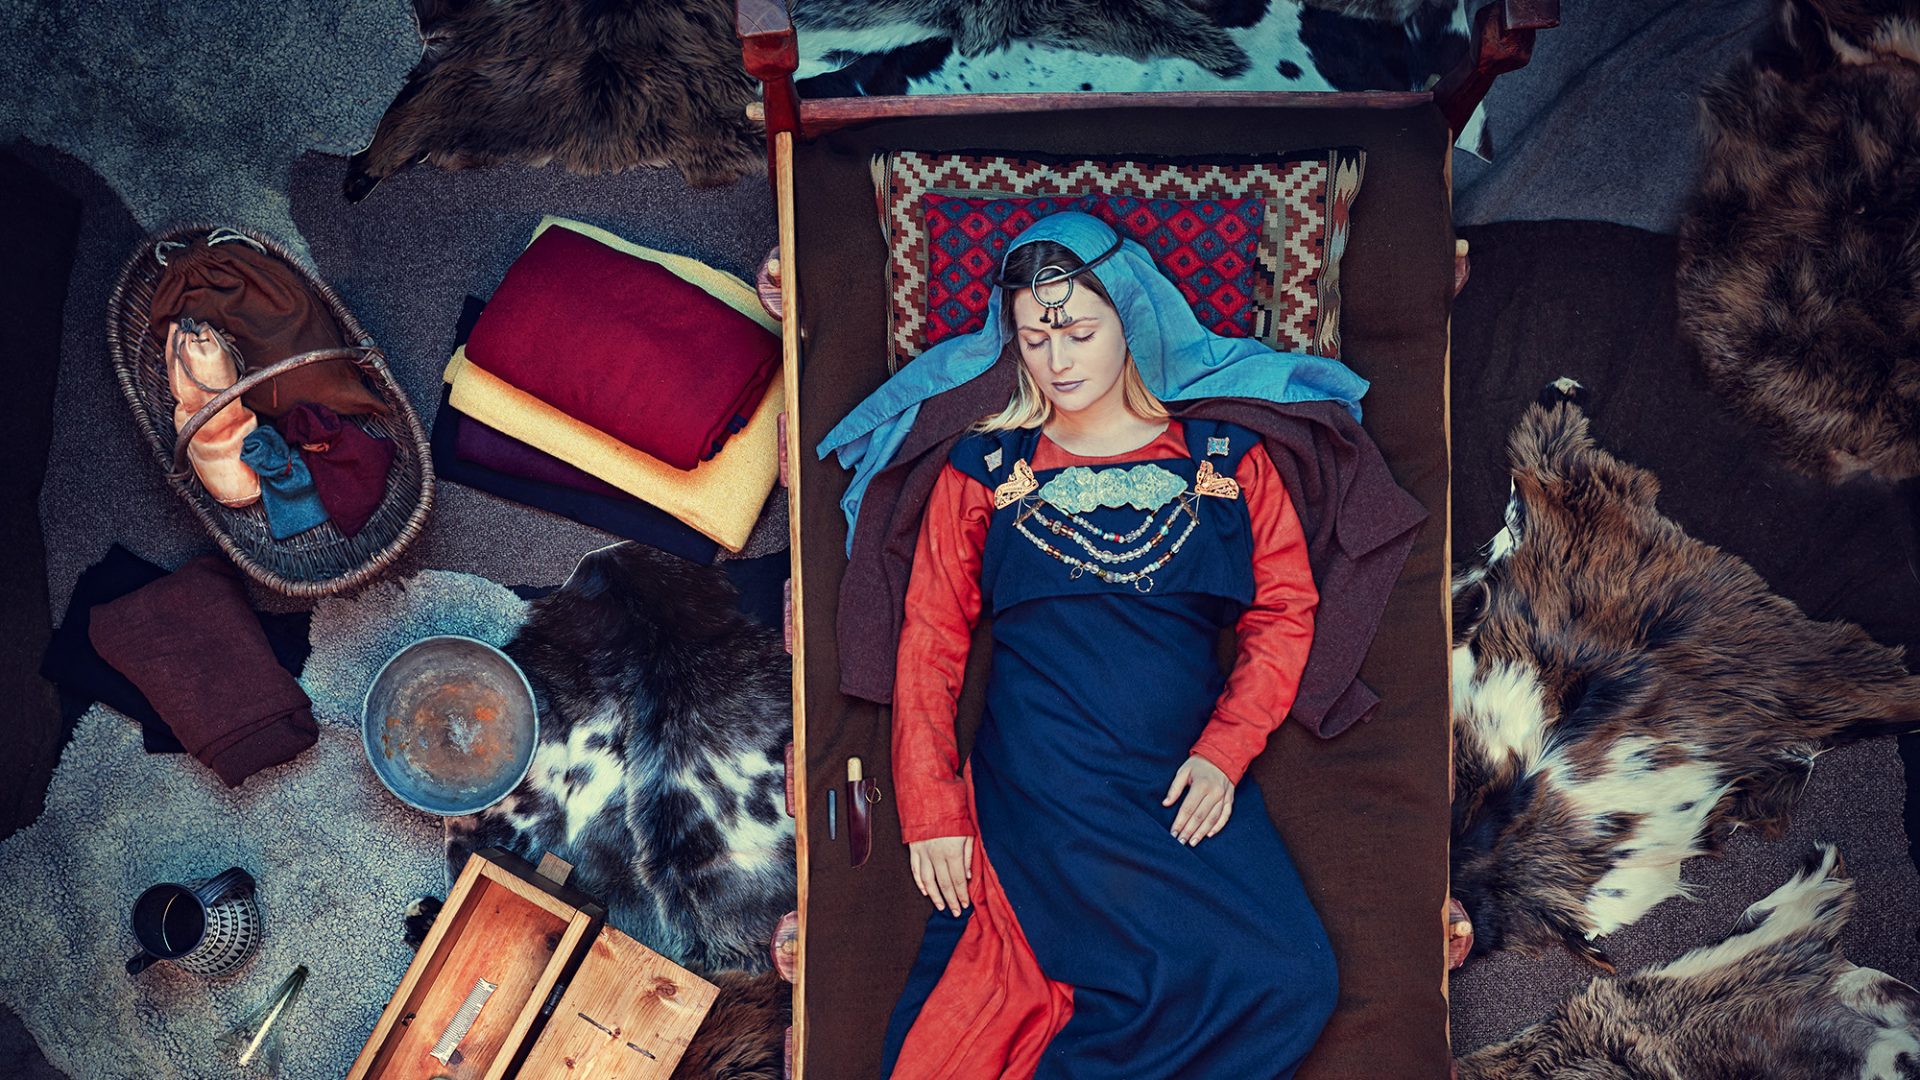 Sveriges historia medeltids kvinna ligger i en säng